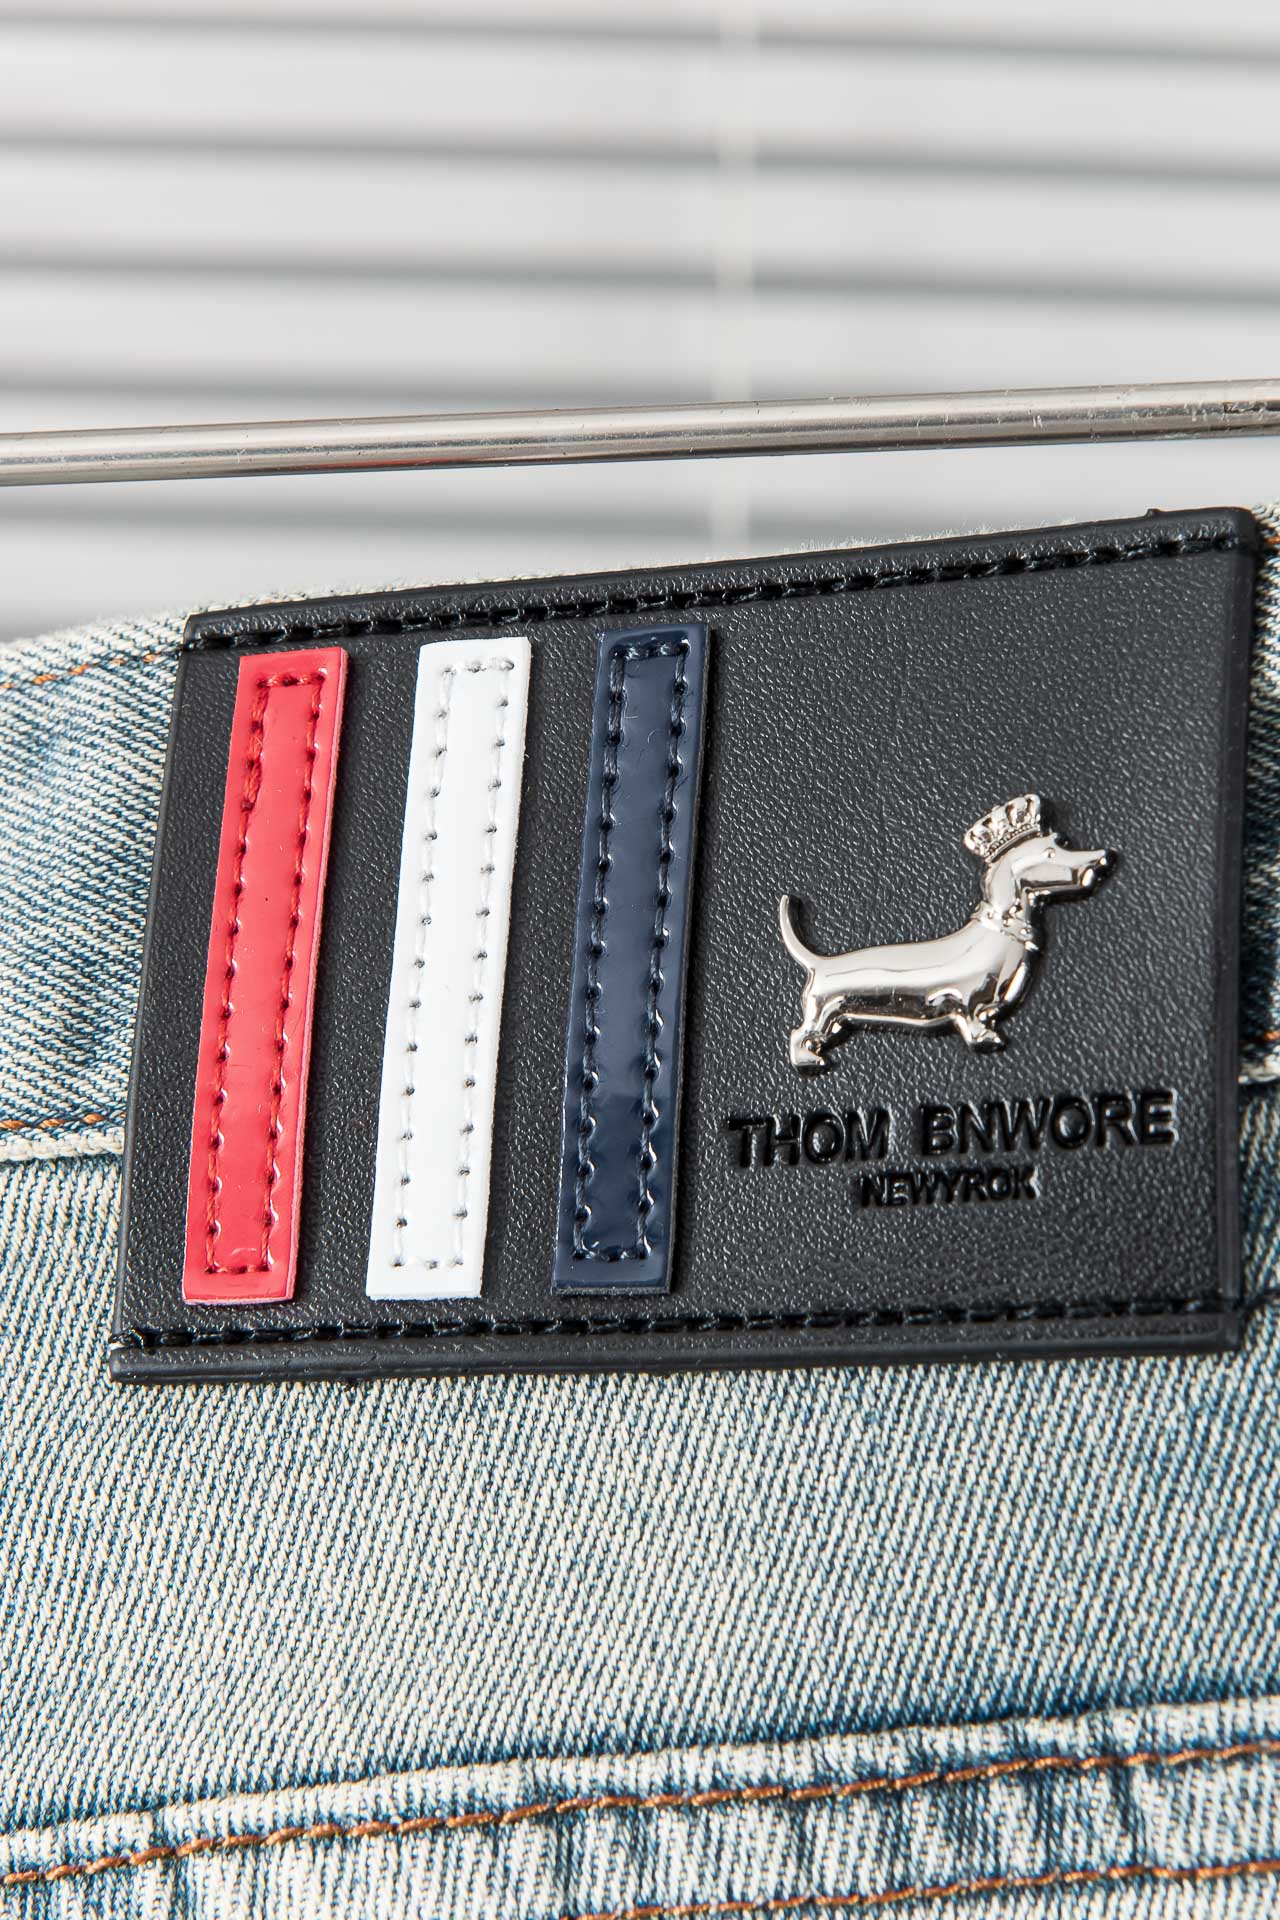 New#ThomBrowne男士时尚直筒牛仔长裤！贸易公司渠道稀出领先官网发售！最新裤装单品奉献所有品质